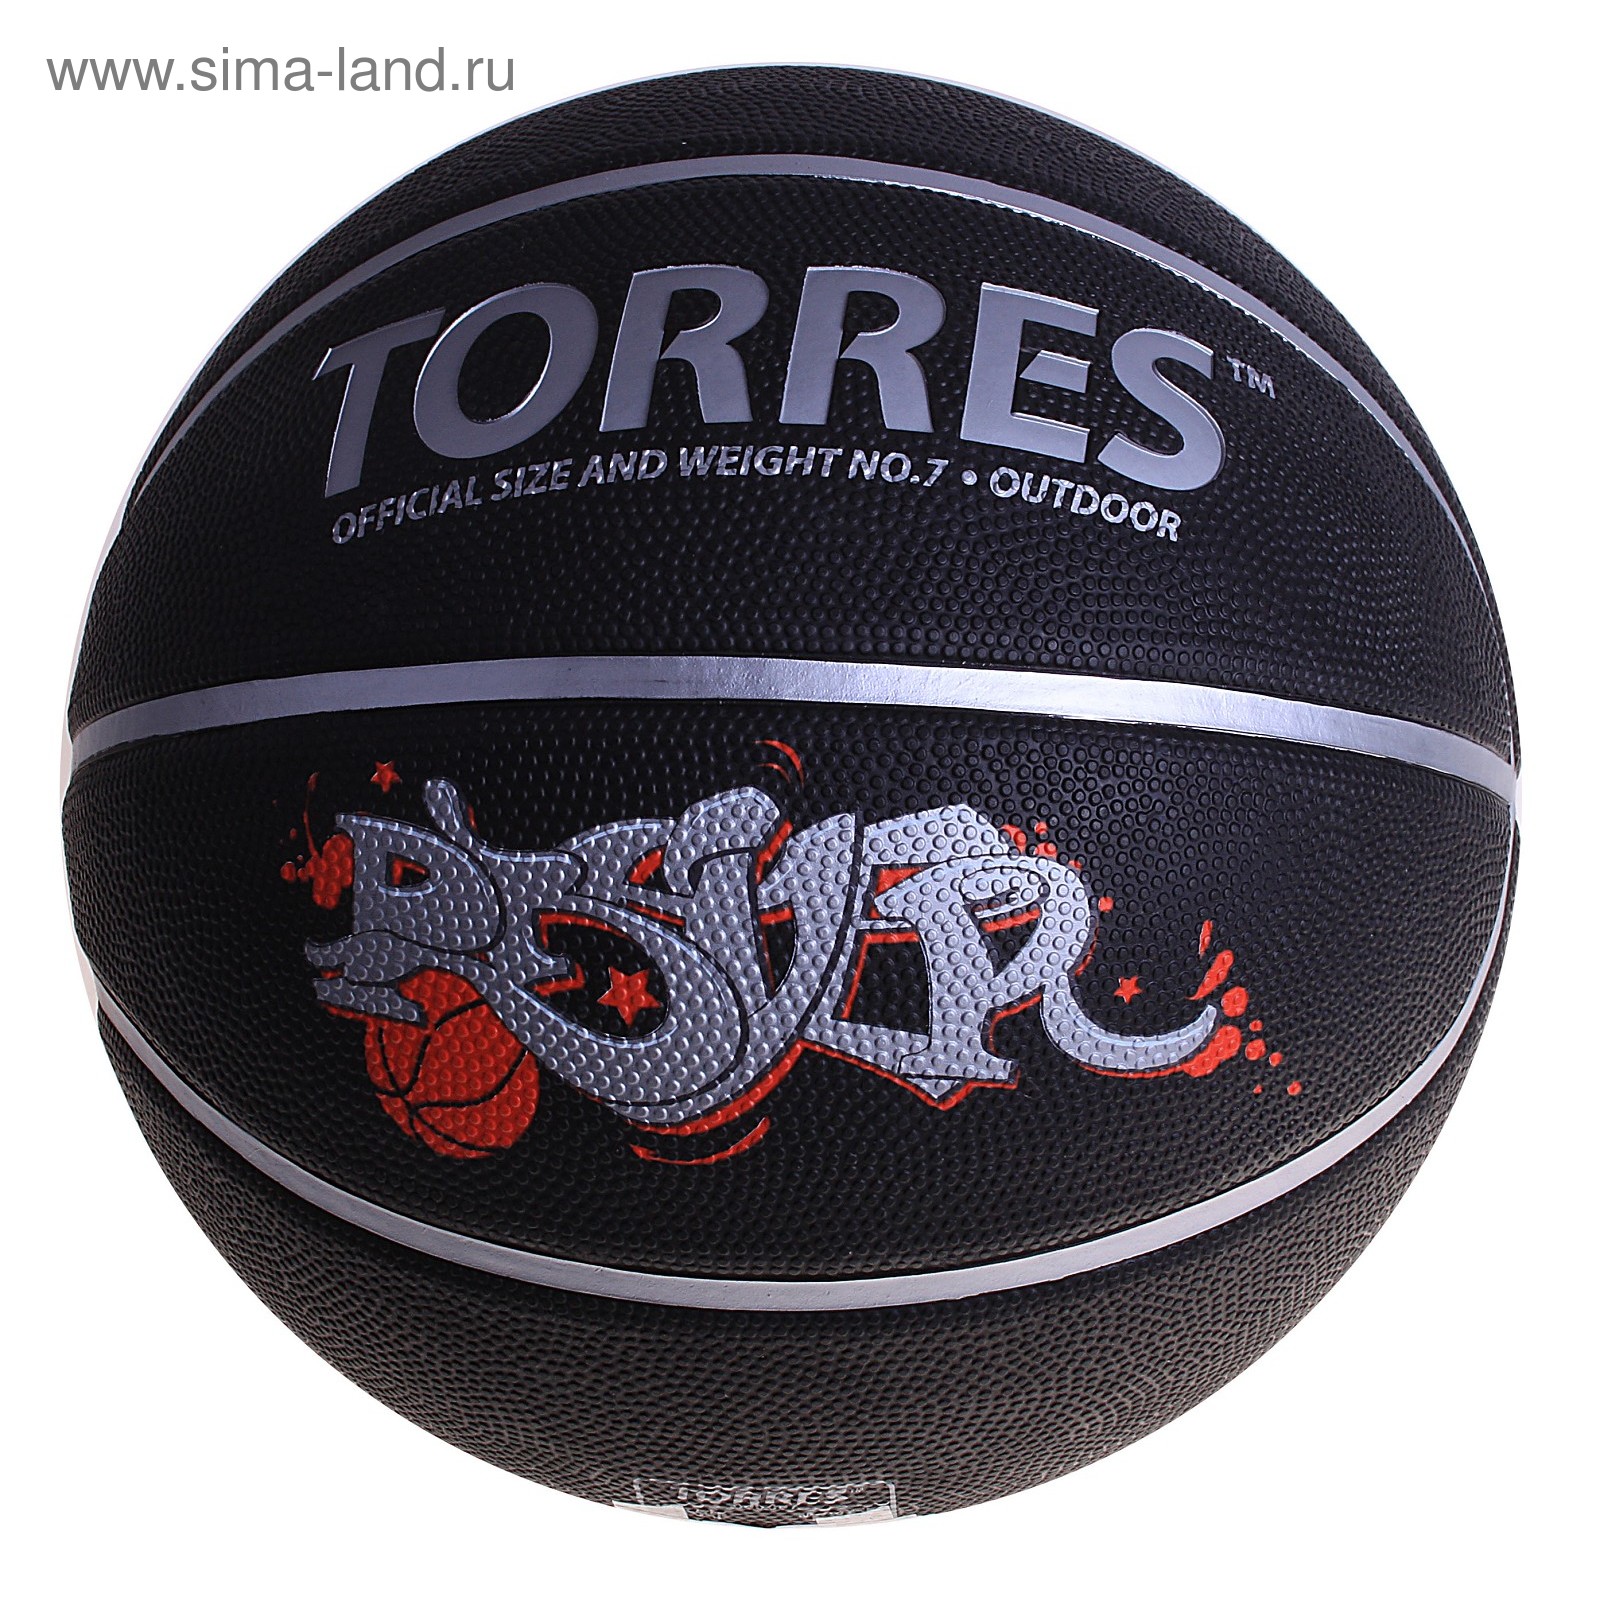 Мяч баскетбольный Torres Prayer, B00057, размер 7